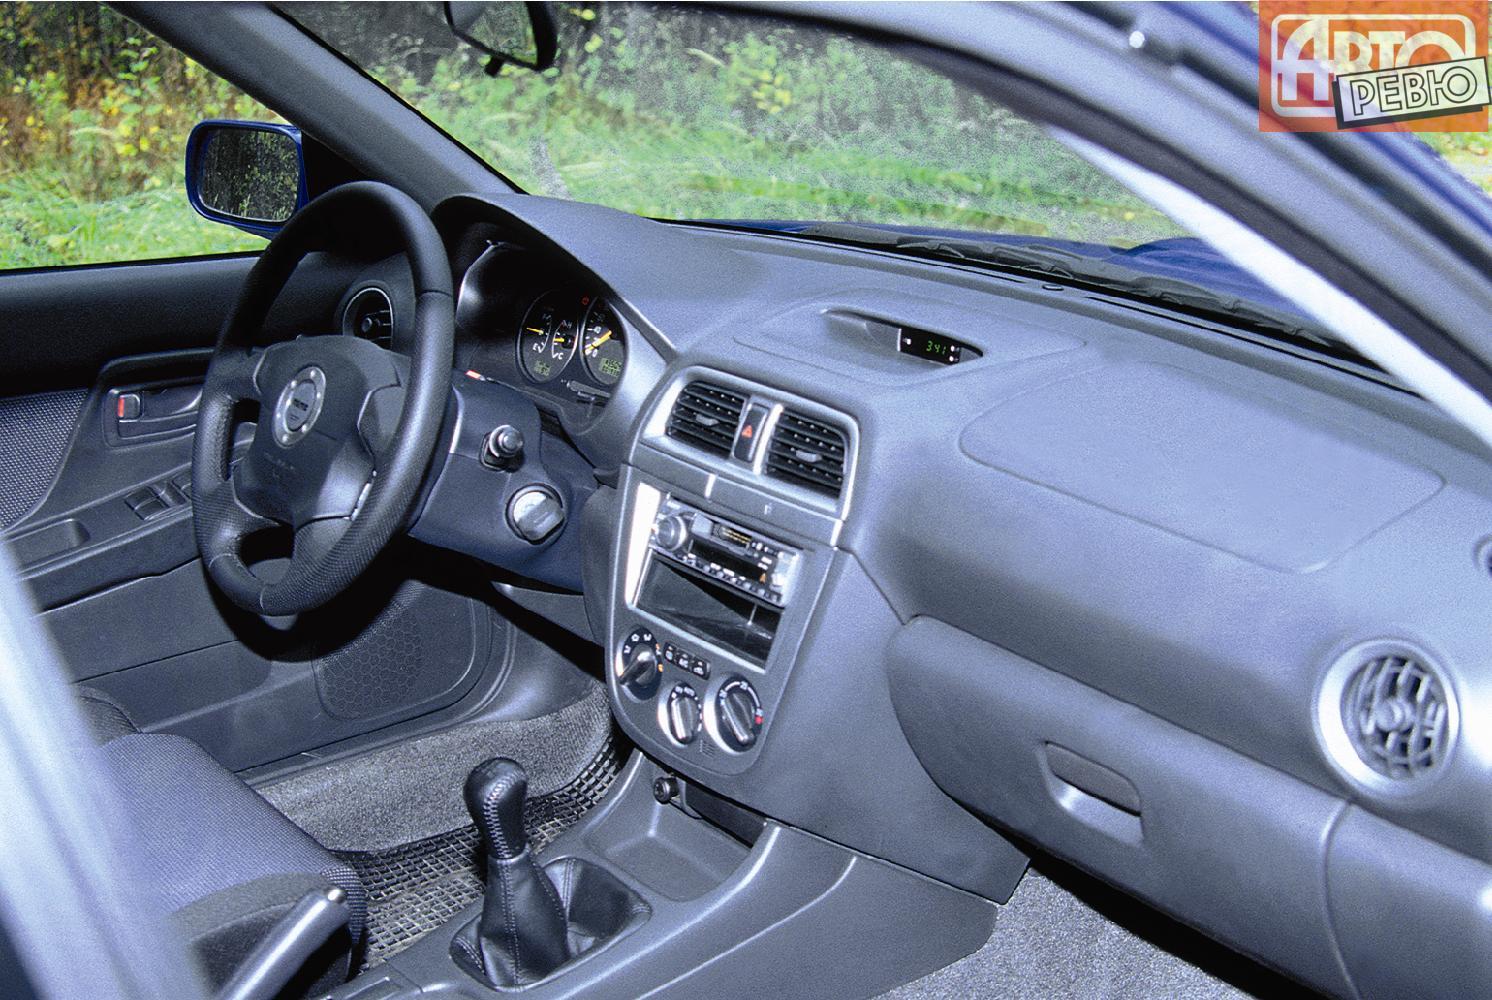 седан Subaru Impreza 2000 - 2002г выпуска модификация 1.5 AT (100 л.с.)